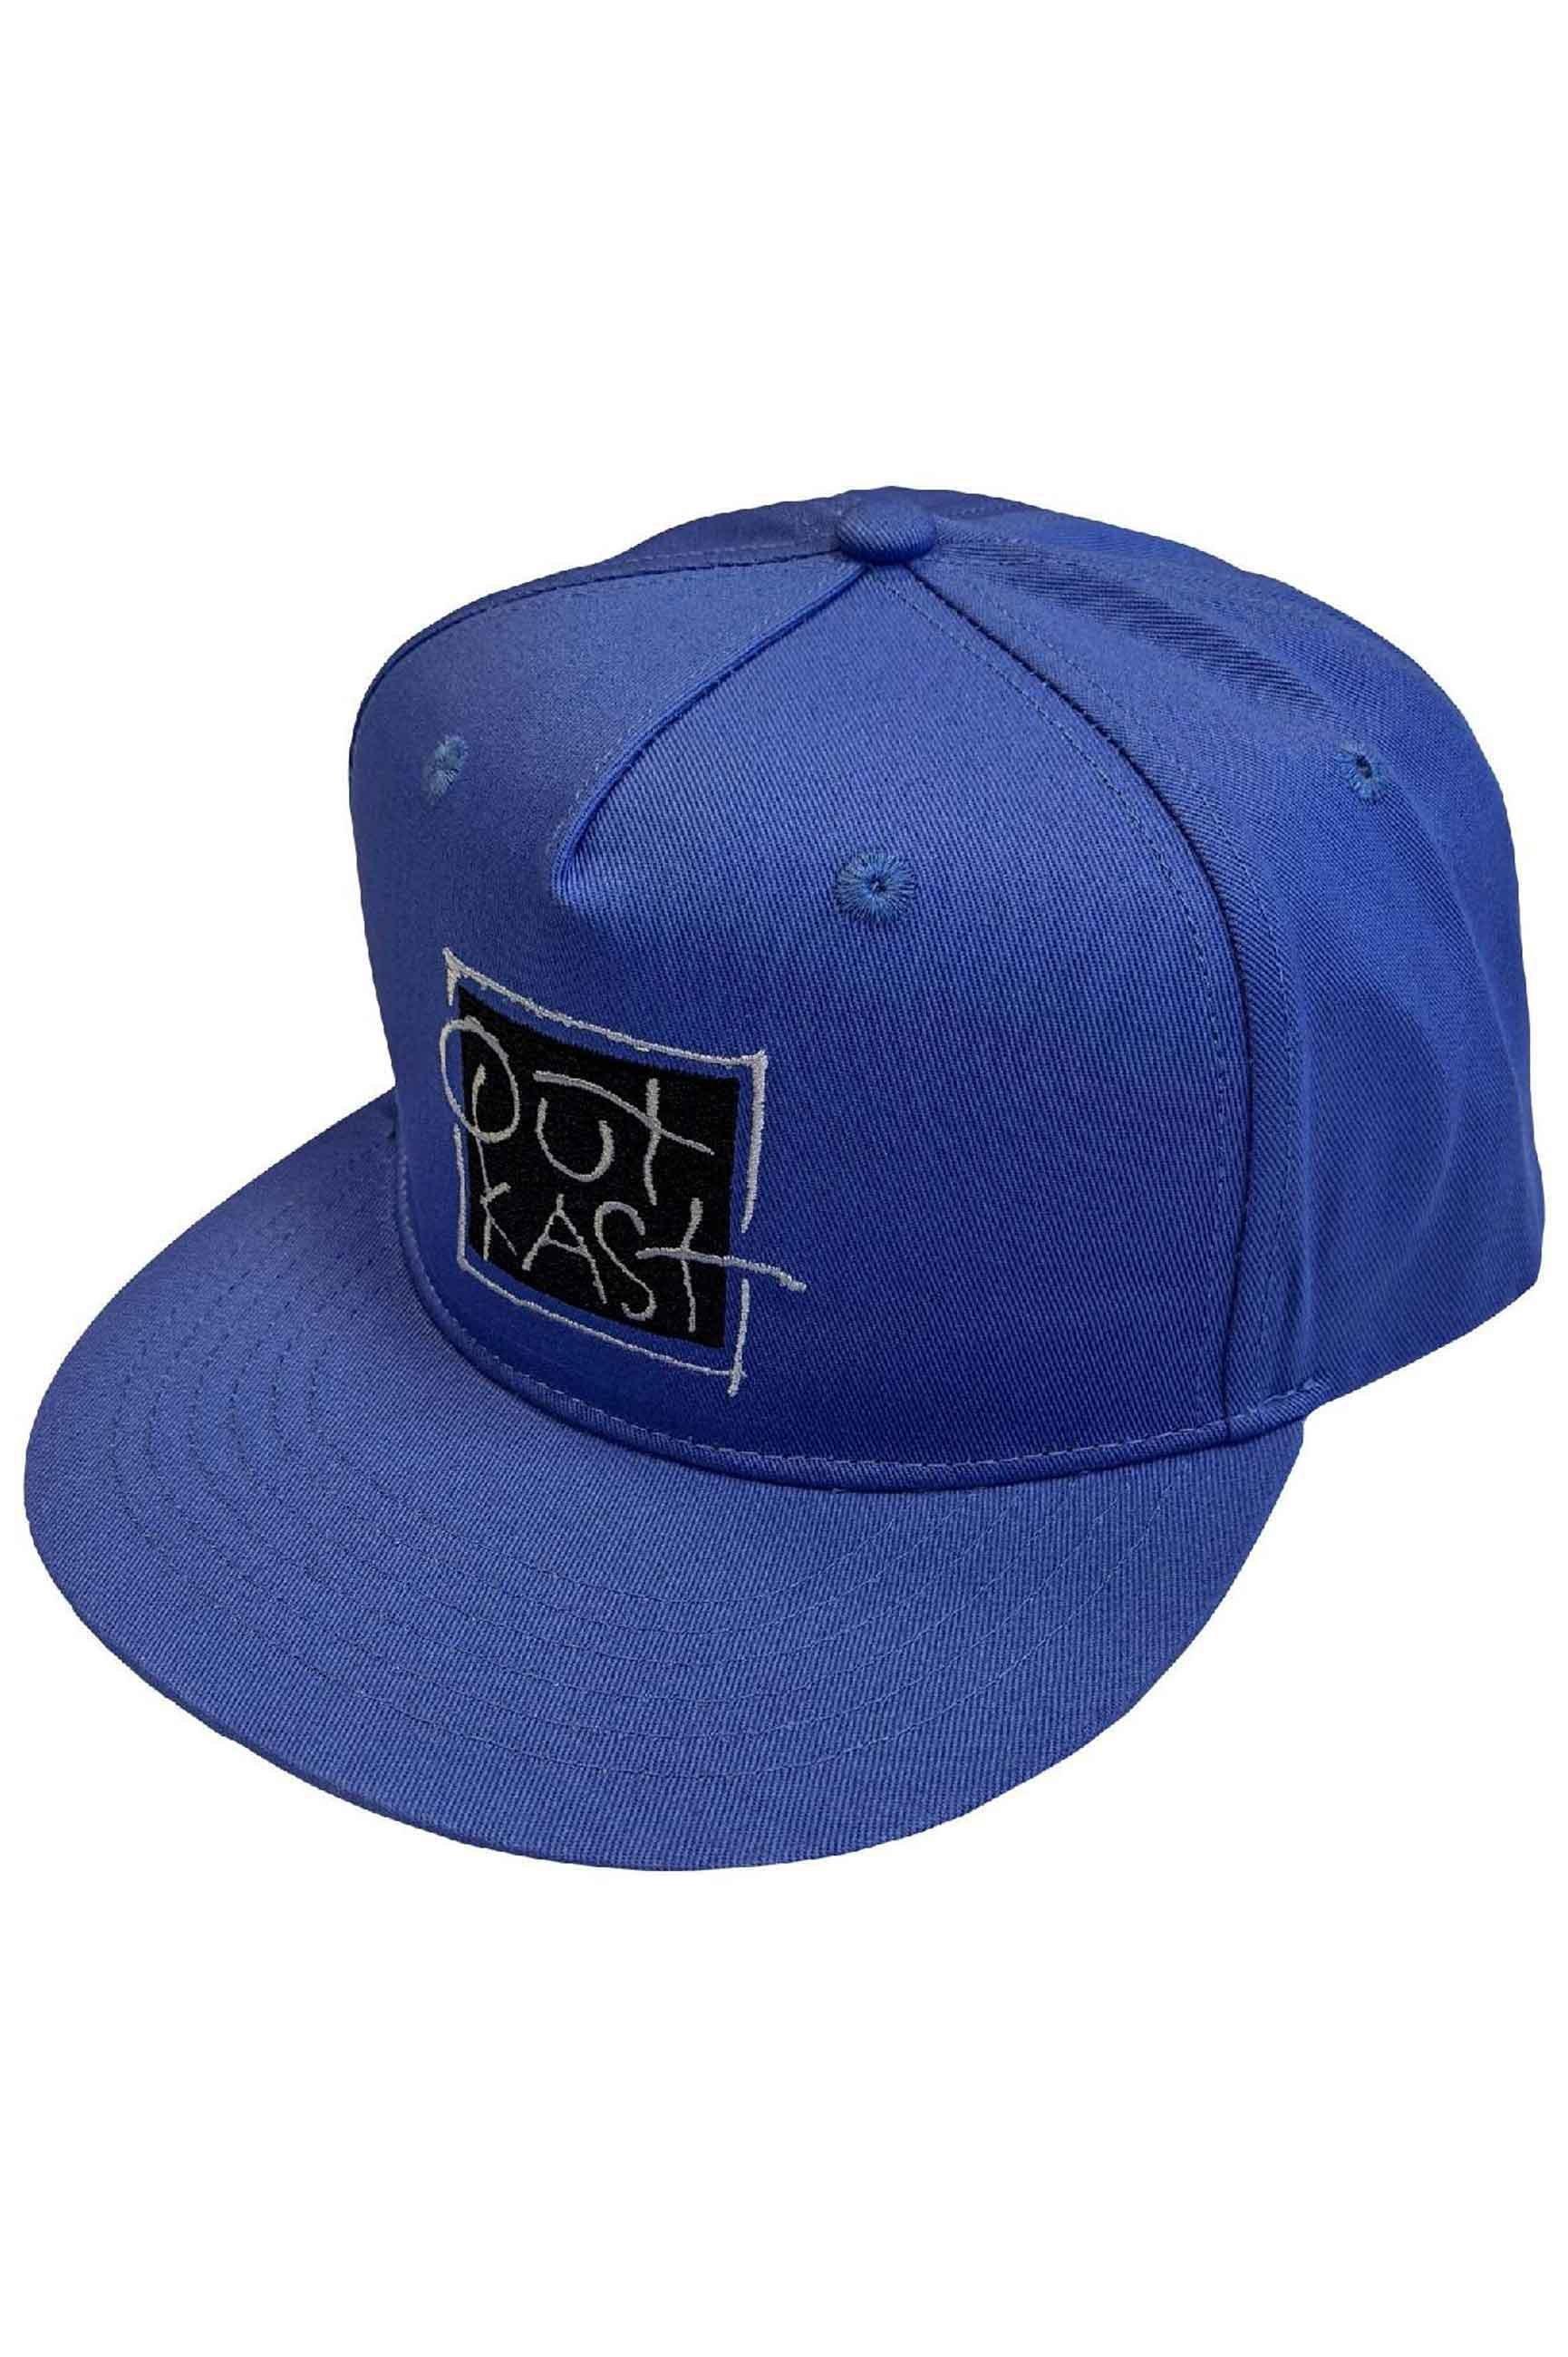 Бейсбольная кепка Snapback с логотипом Box Outkast, синий коробка my warm box синяя